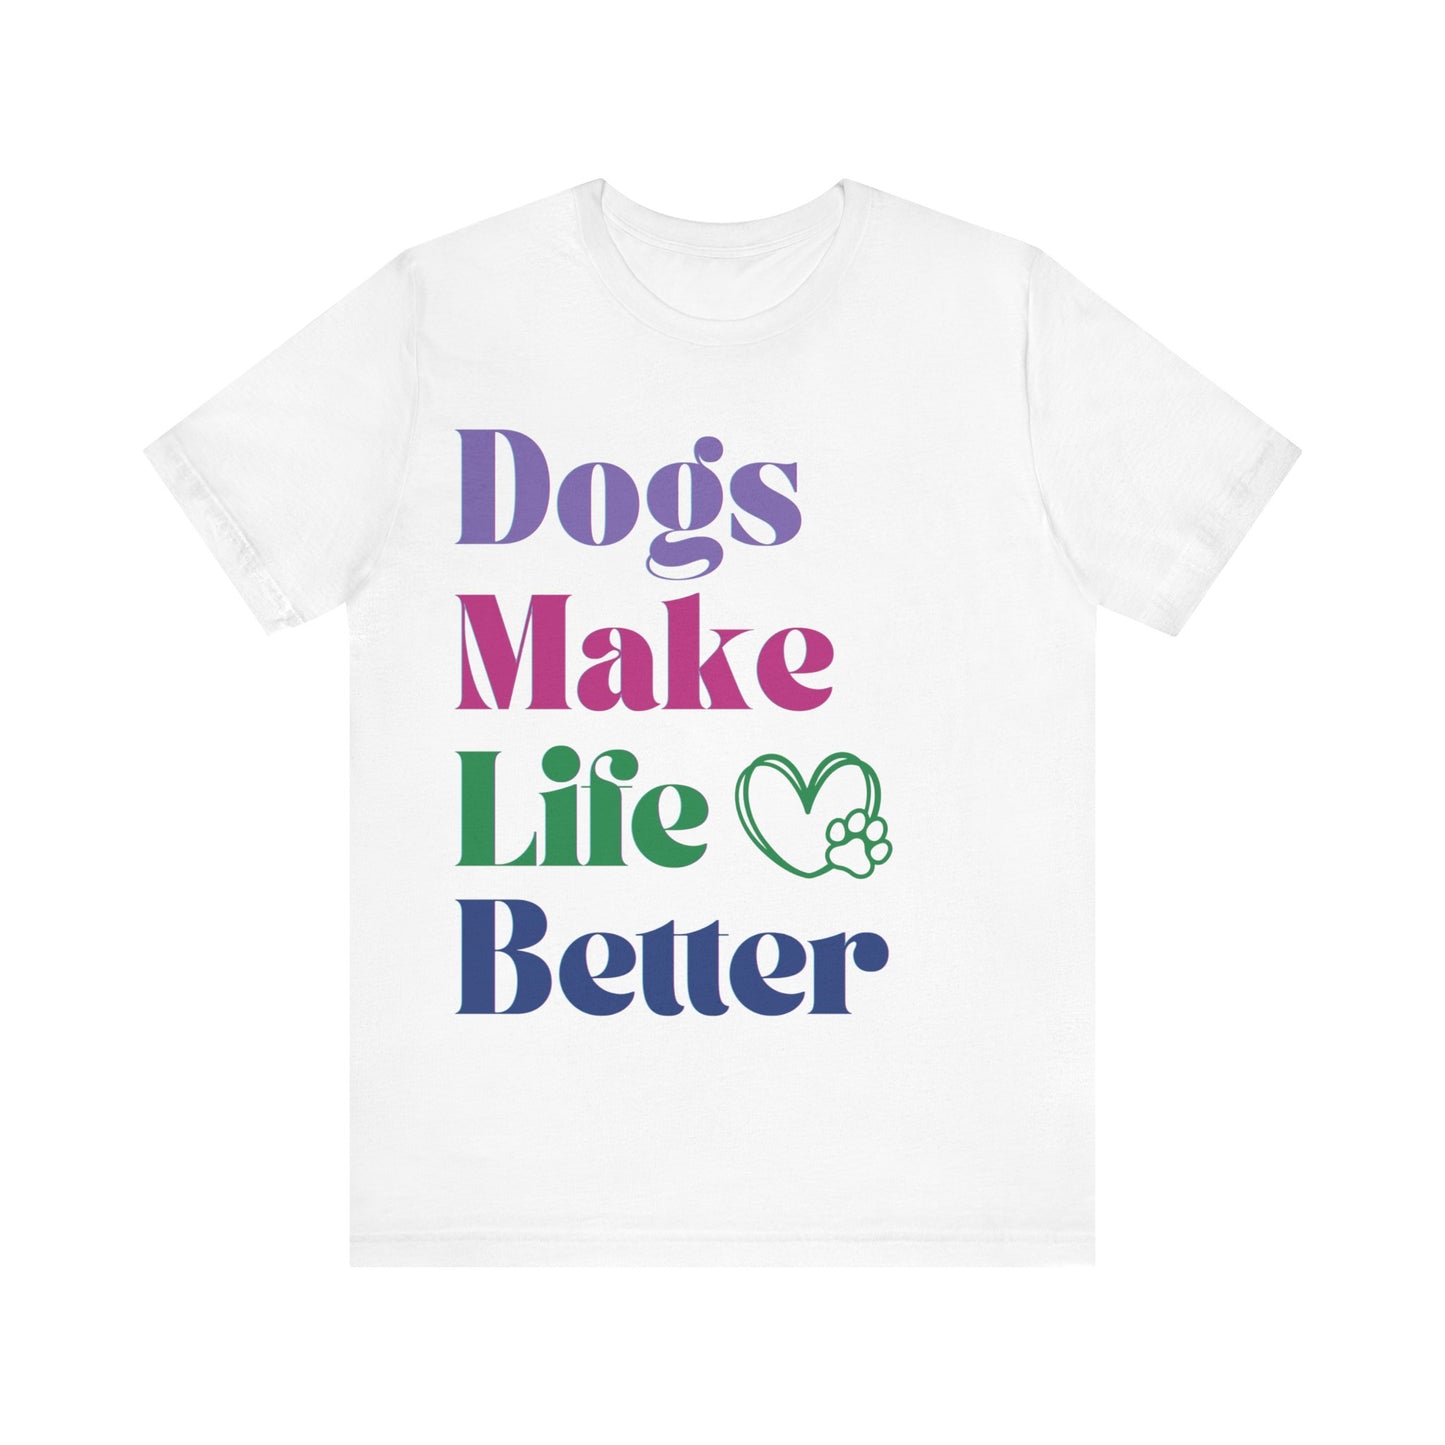 Dogs Make Life Better Shirt